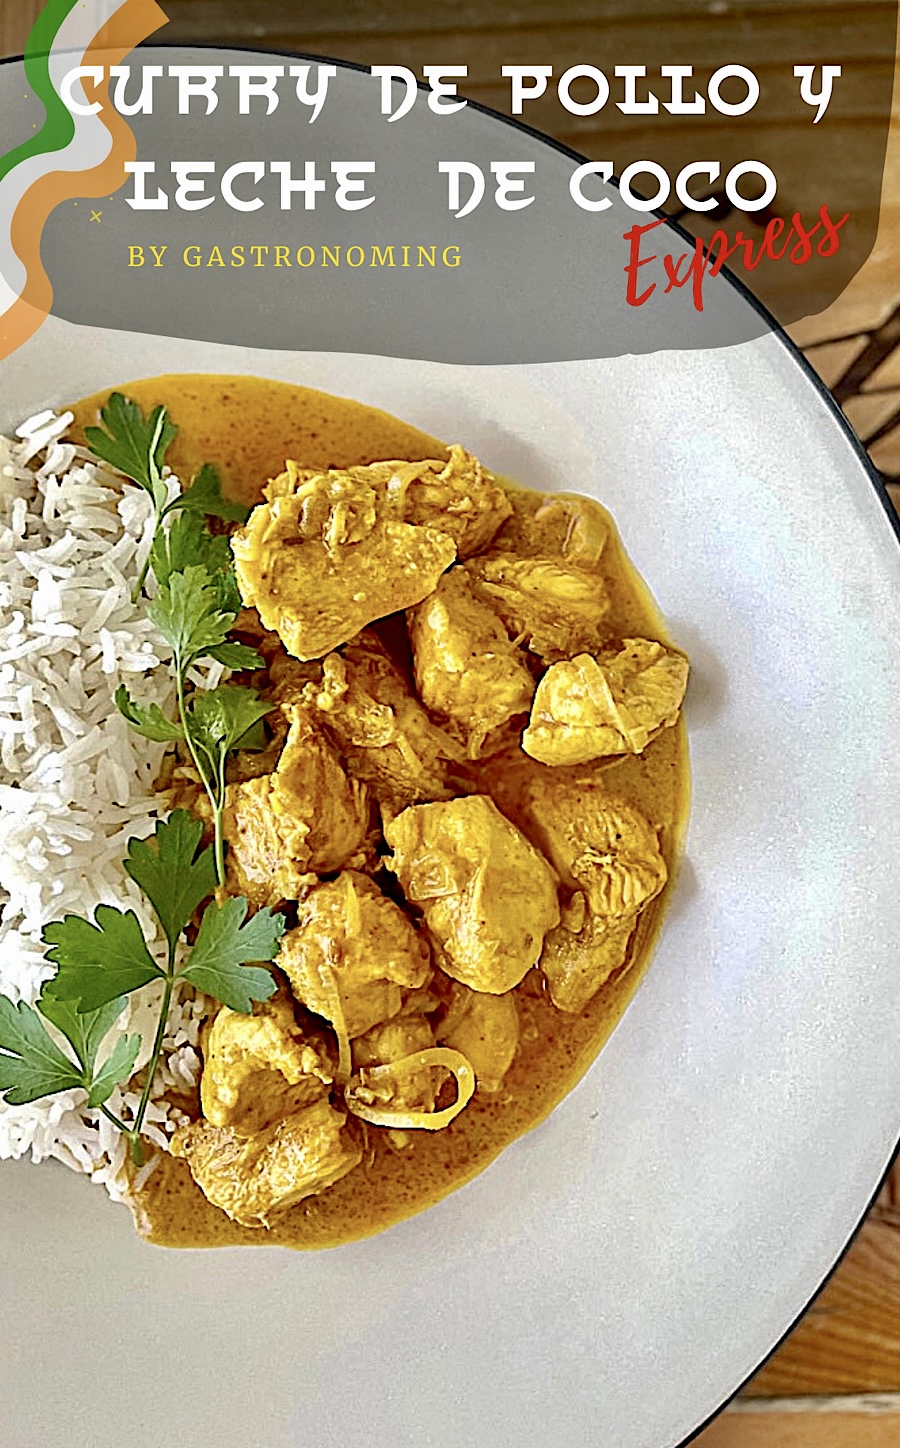 Curry de pollo y leche de coco express